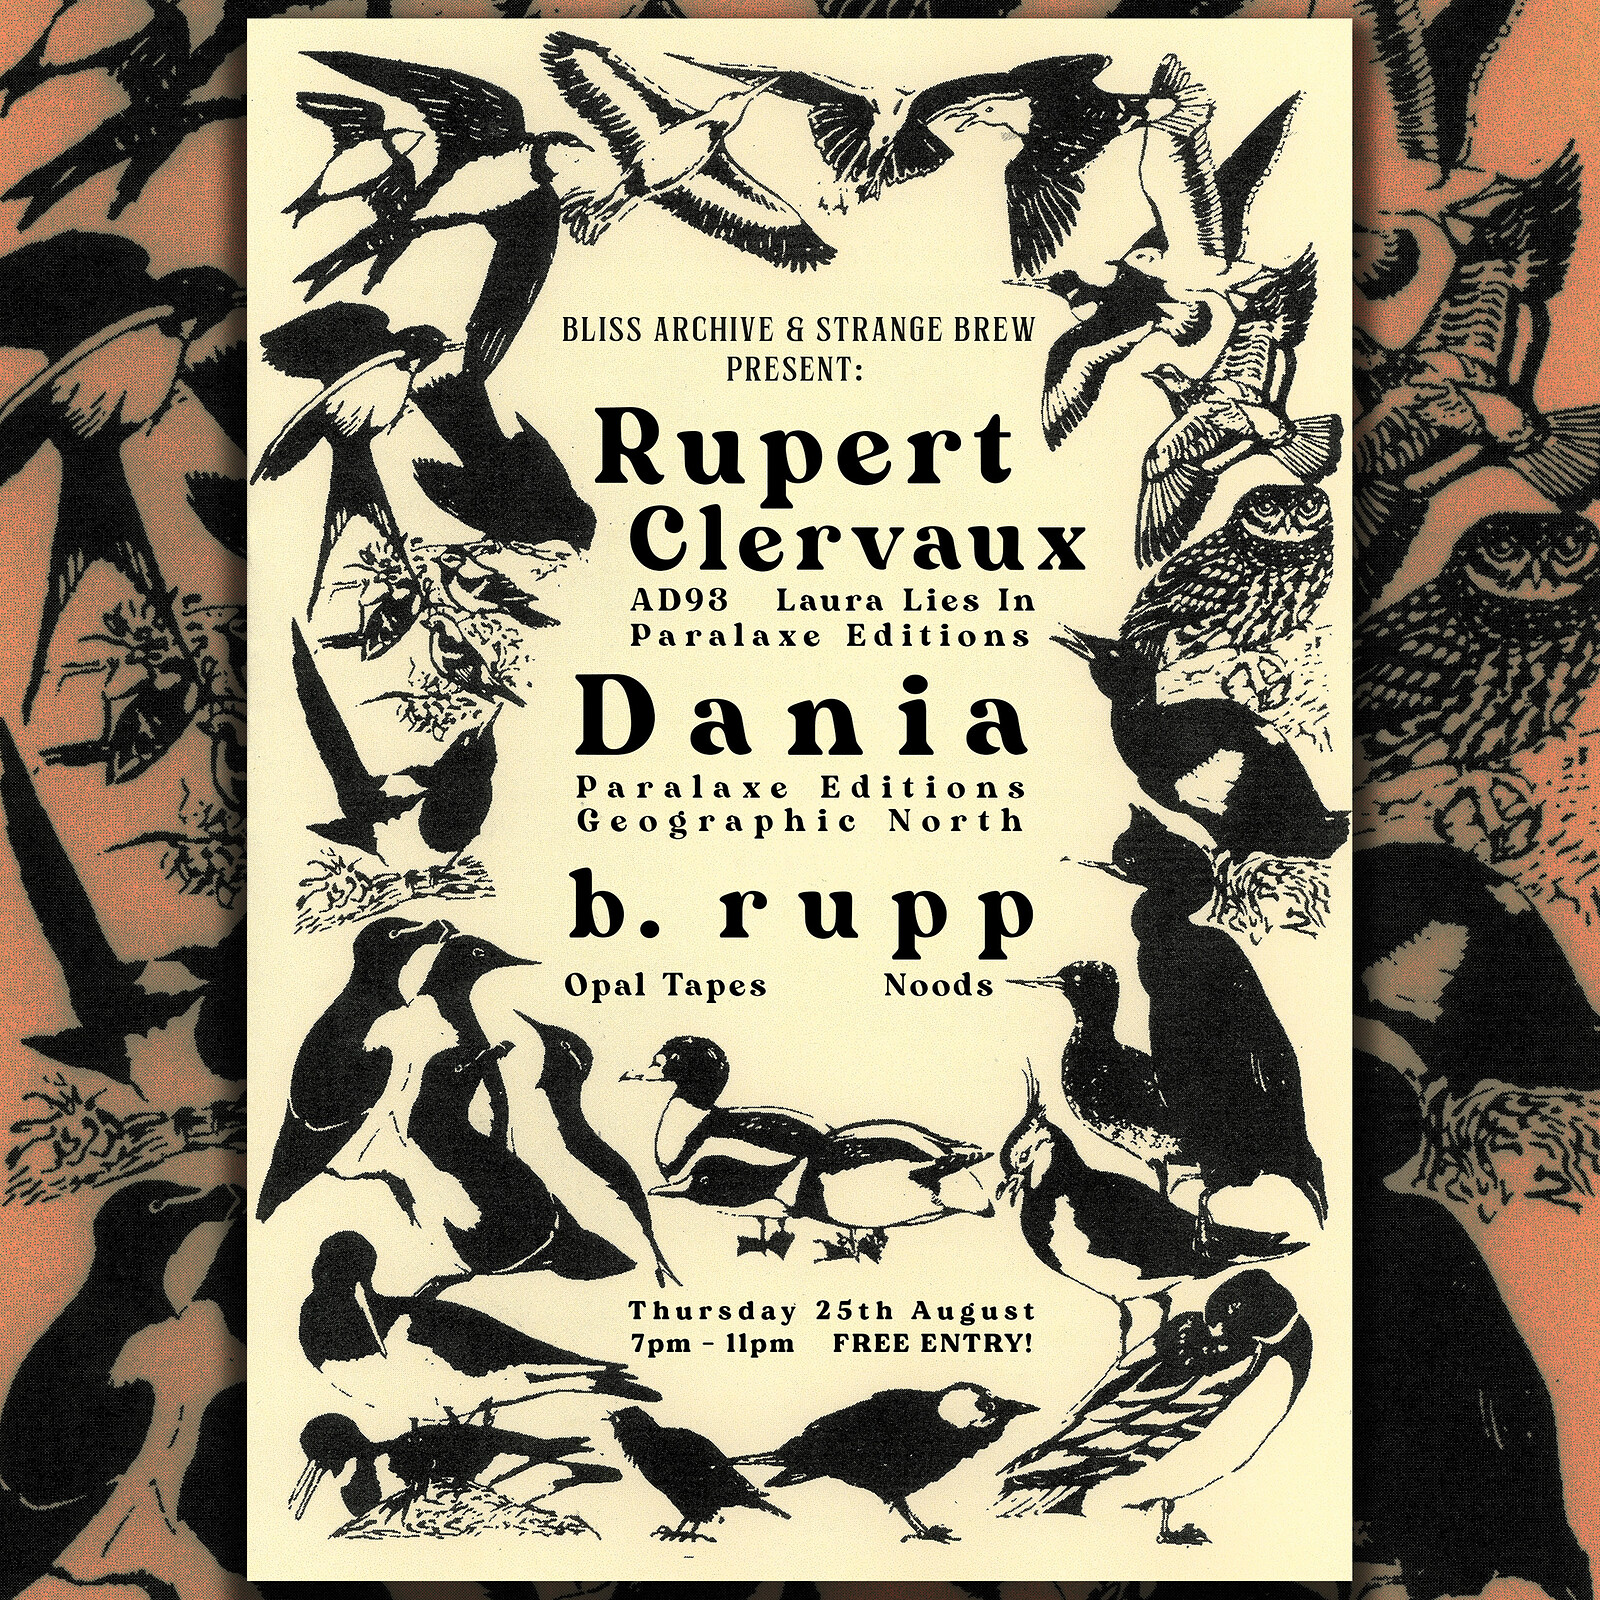 Rupert Clervaux, Dania & B. Rupp - FREE / at Strange Brew